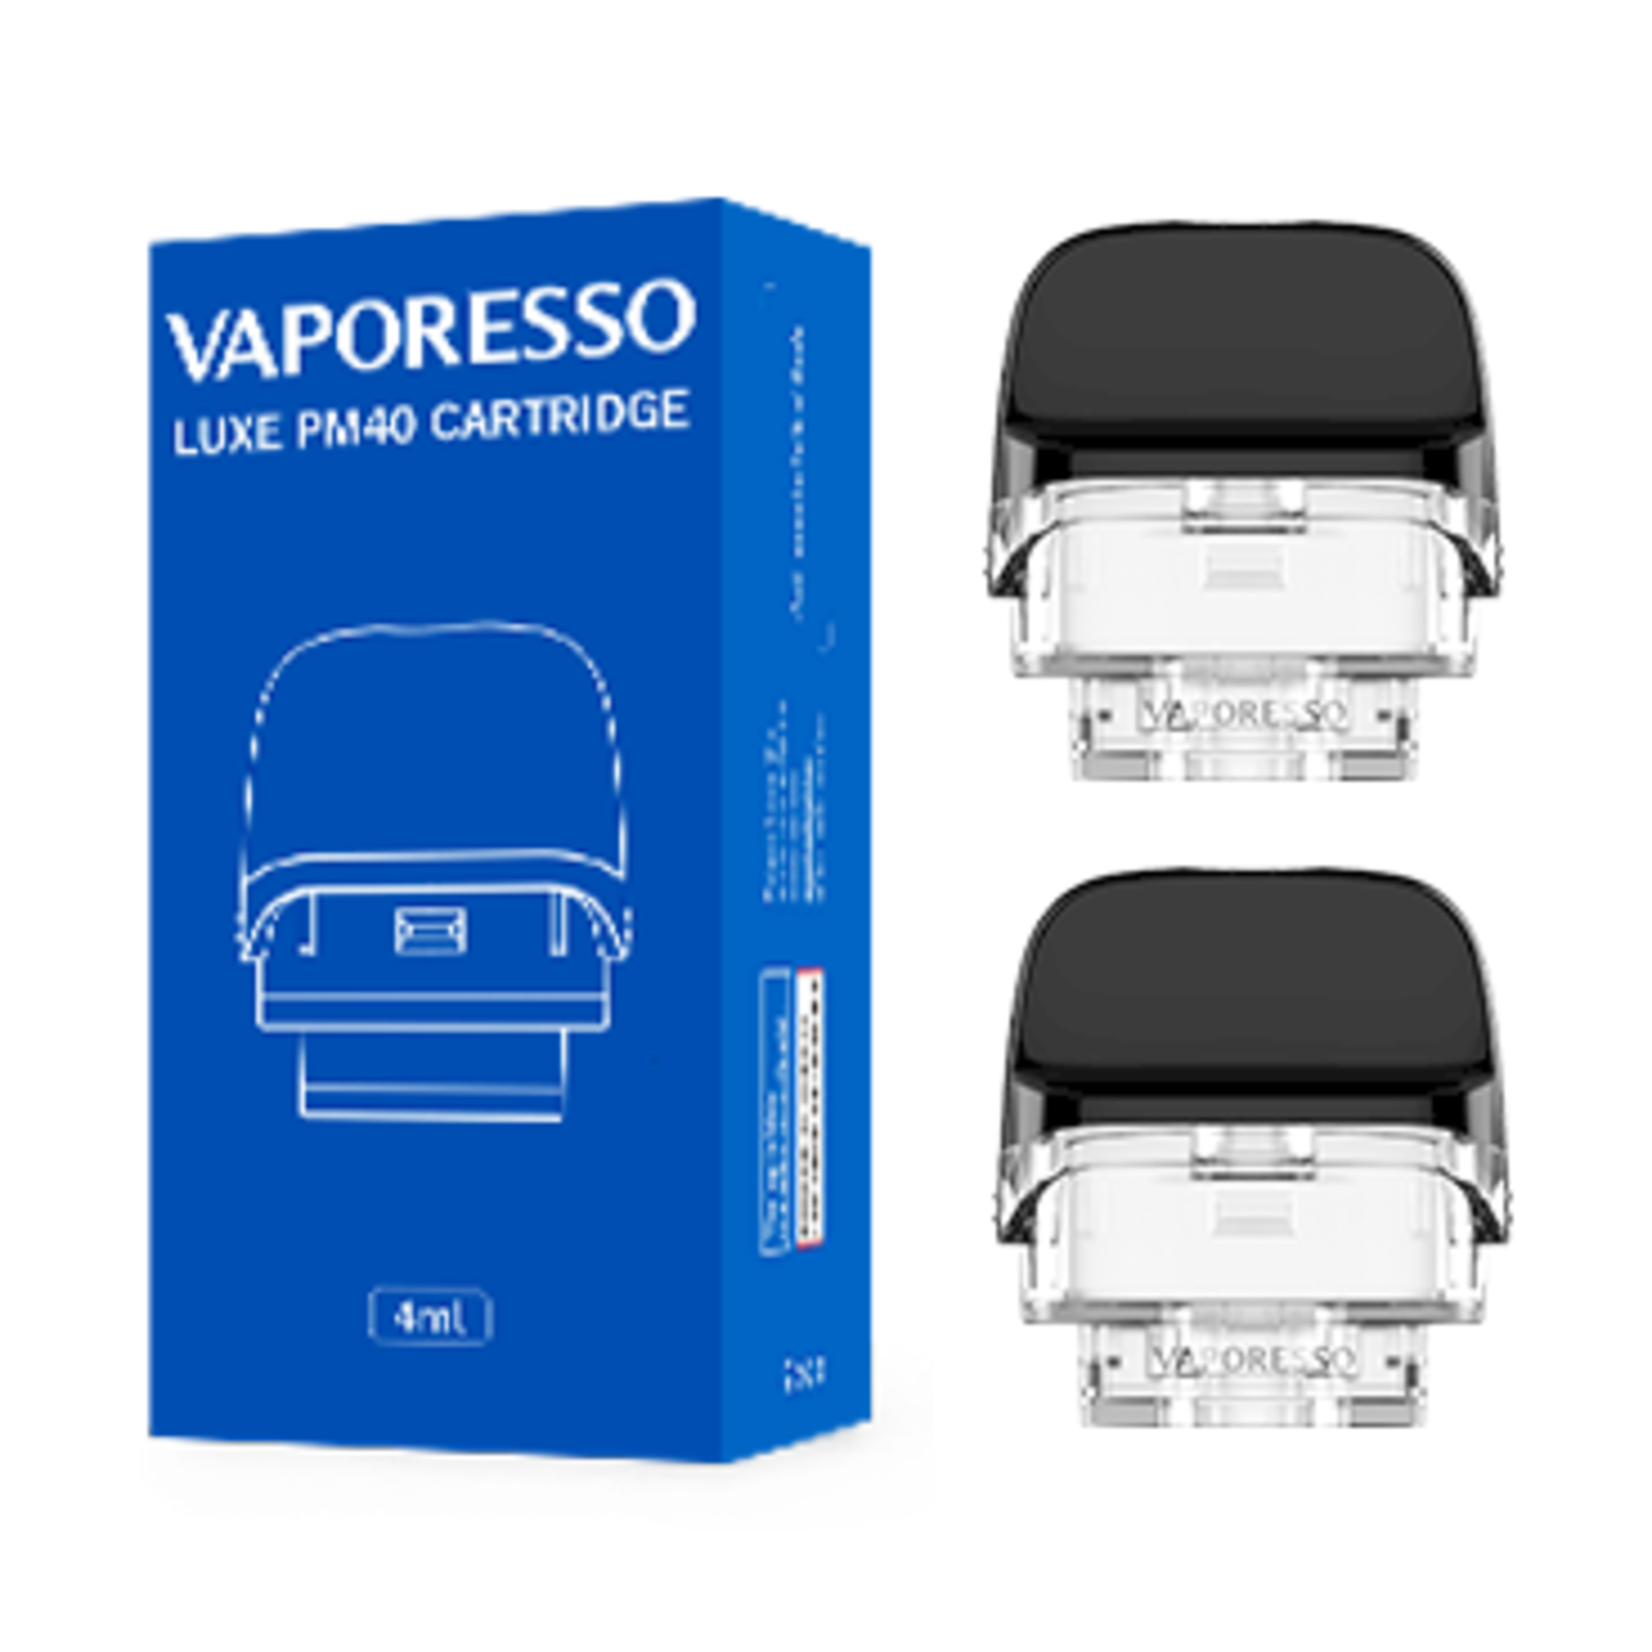 Vaporesso Lux Pm40 Cartridge (Box of 2)